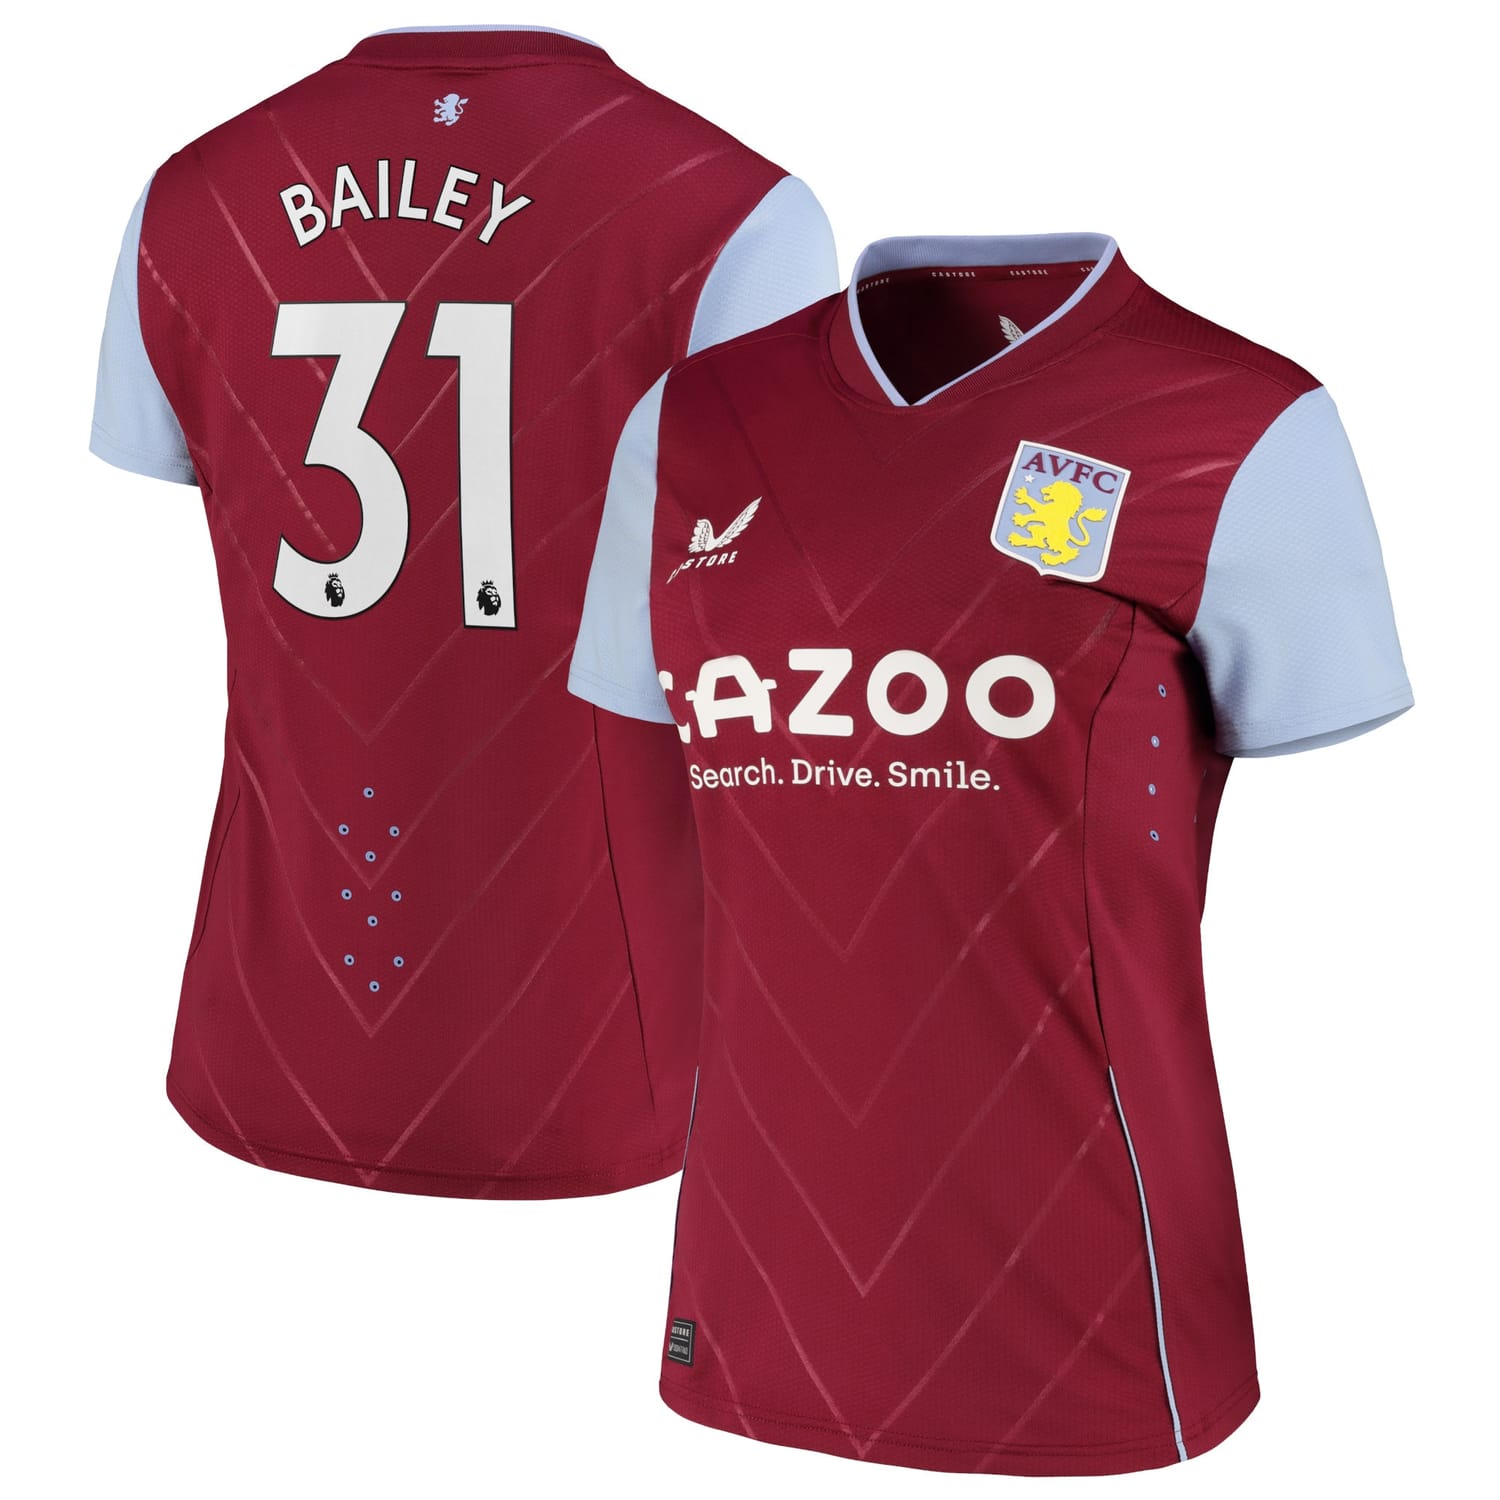 Premier League Aston Villa Home Pro Jersey Shirt 2022-23 player Leon Bailey 31 printing for Women